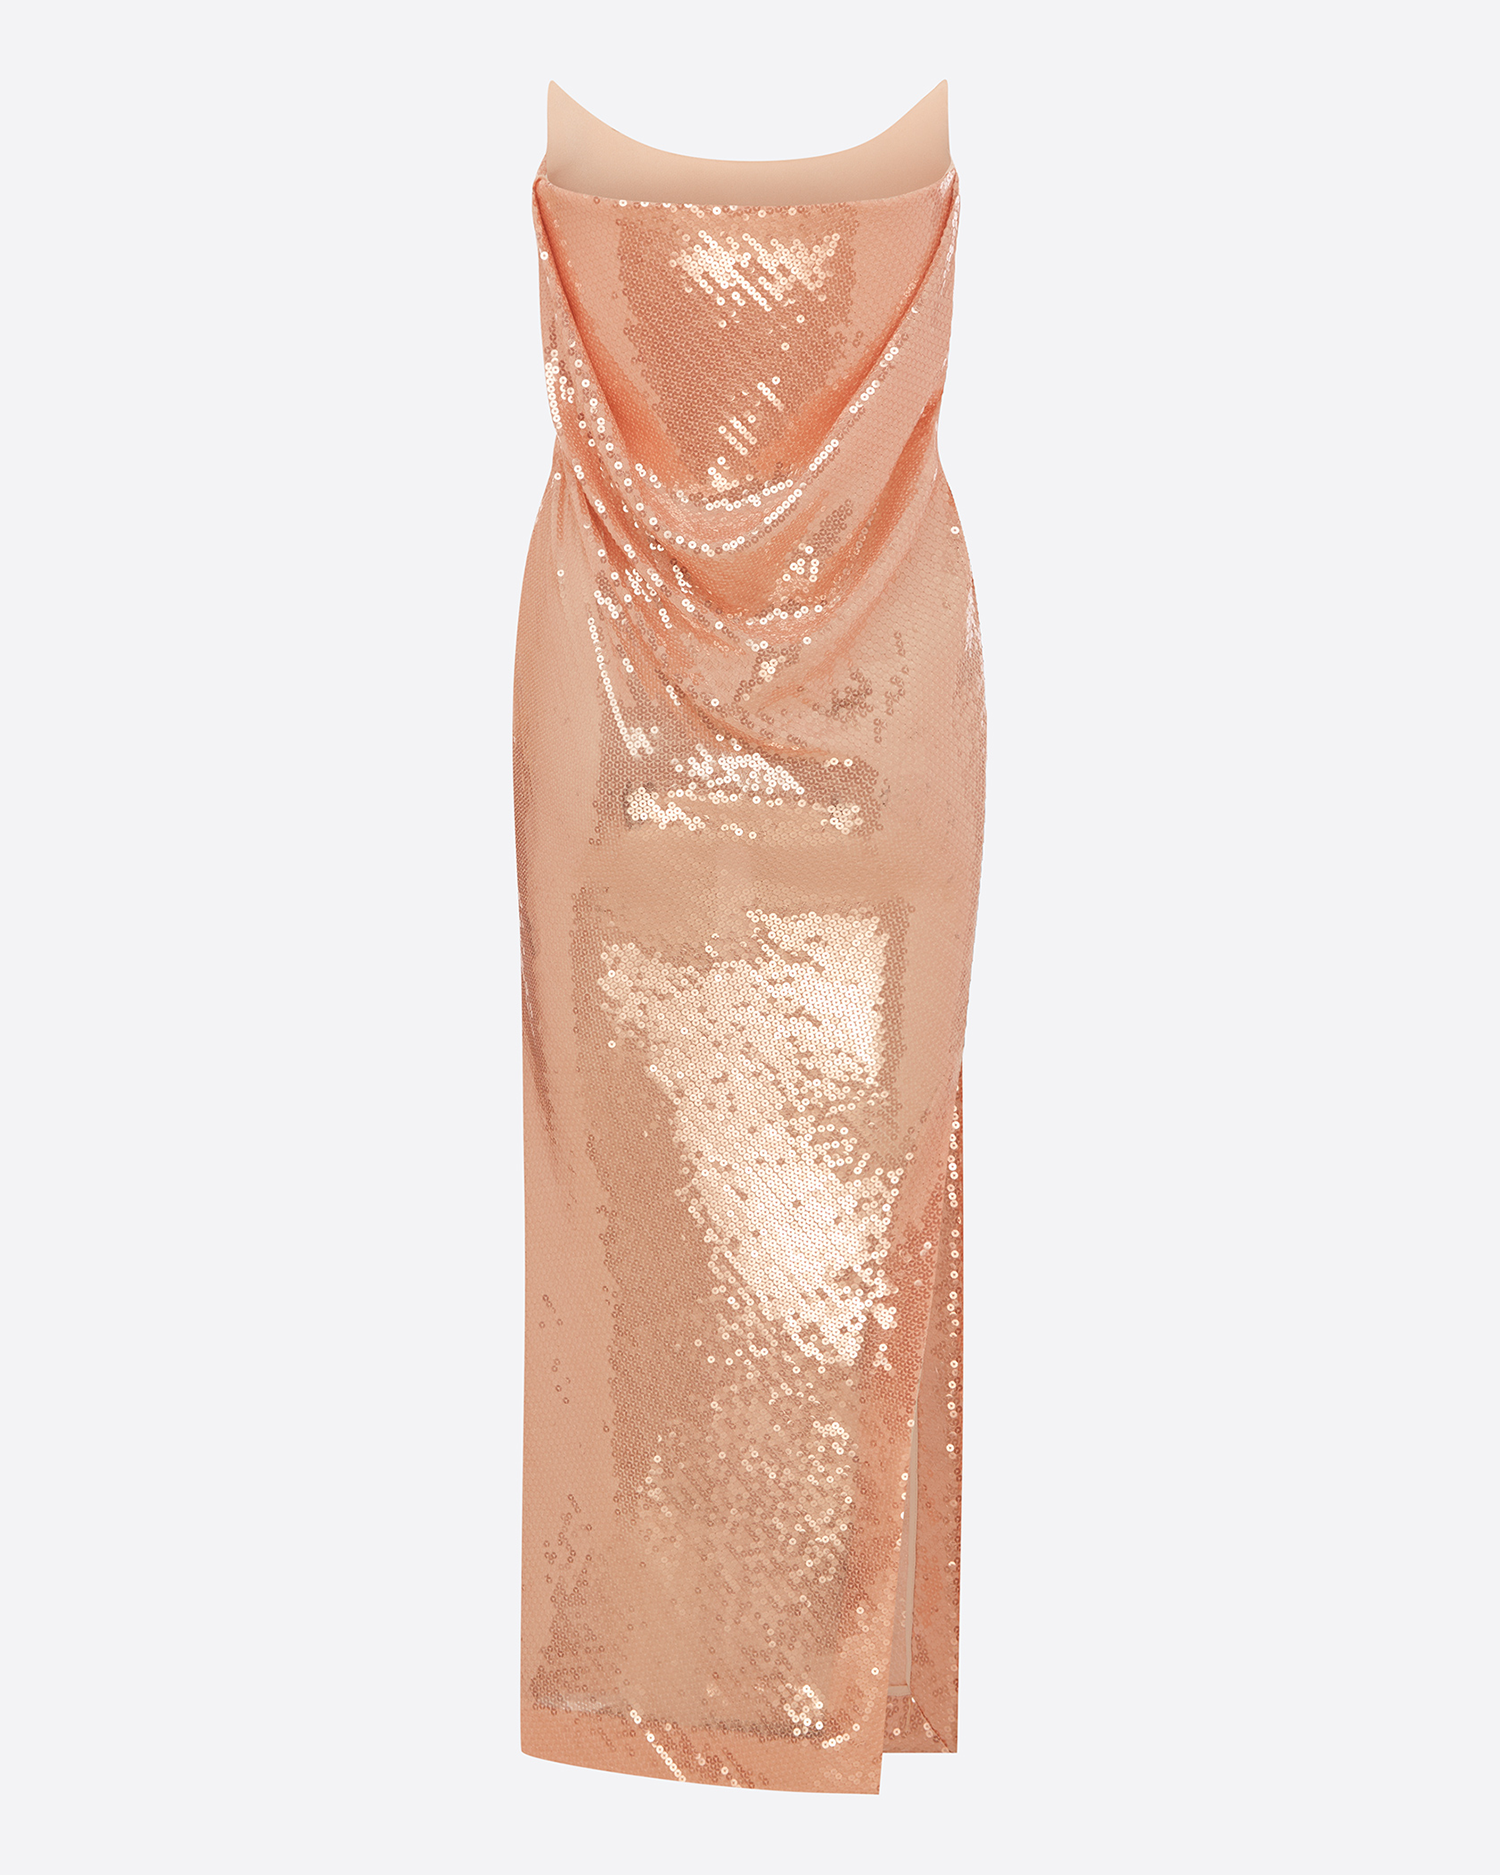 Layered Strapless Drape Corset Dress in Sequin